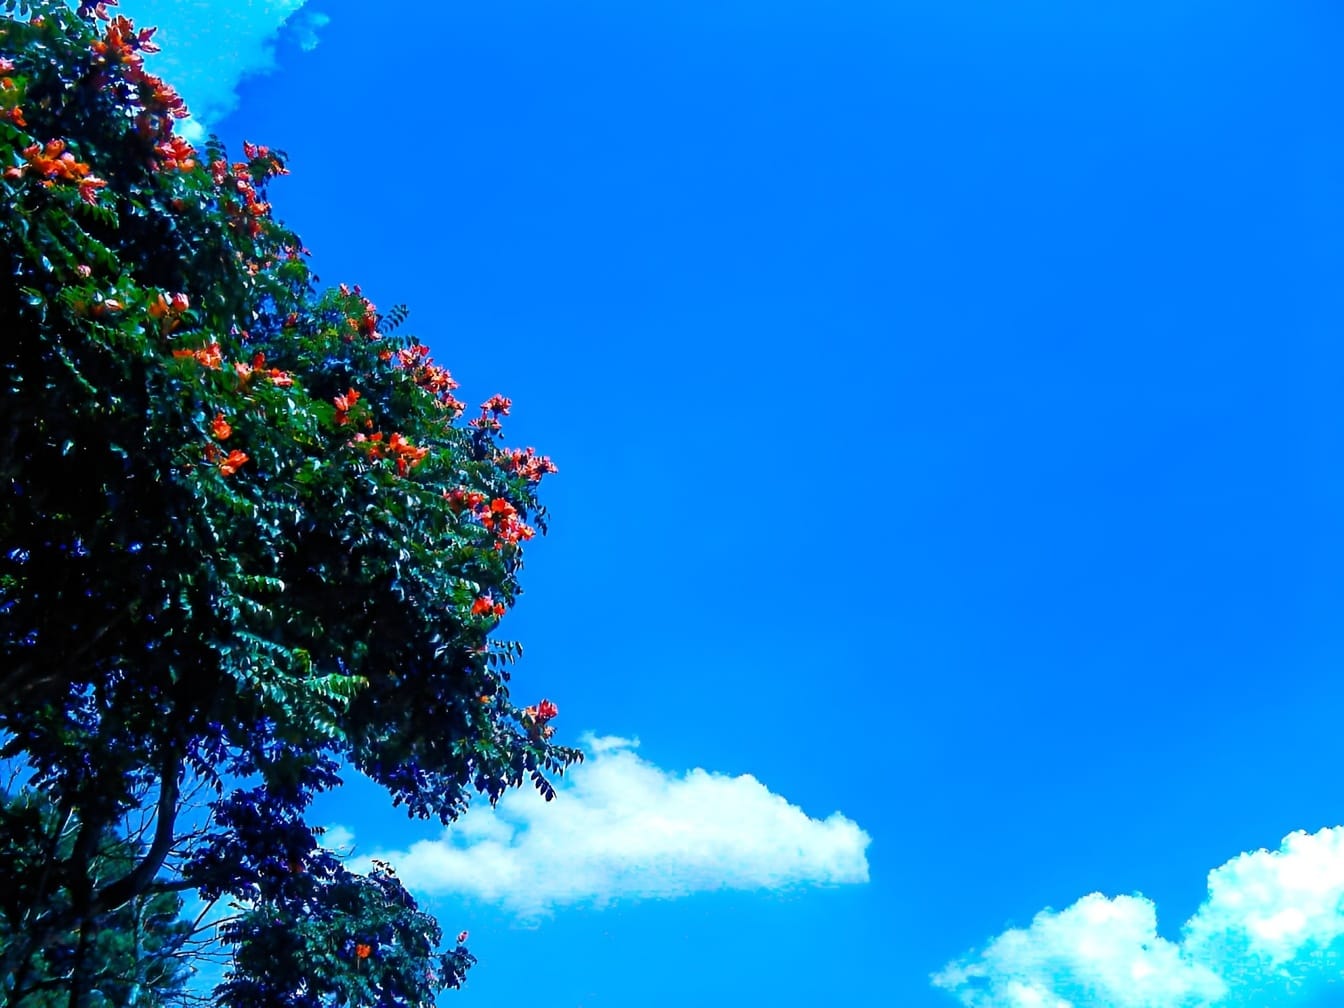 Afrikaanse boom (Spathodea campanulata) met rode bloemen en donkerblauwe hemel